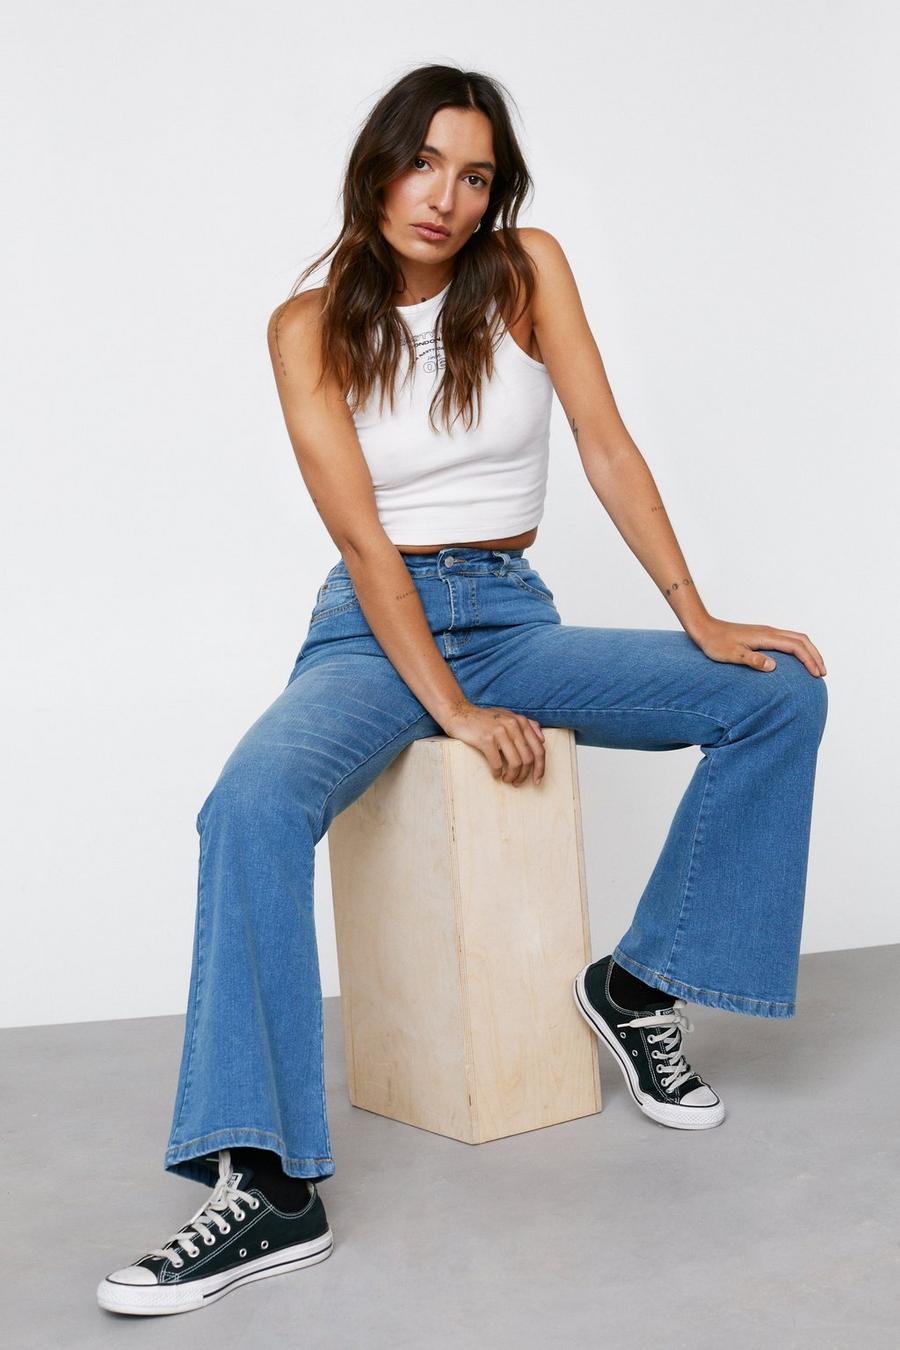 Women's Jeans | Denim Jeans & Black Friday Jeans Sale | Nasty Gal